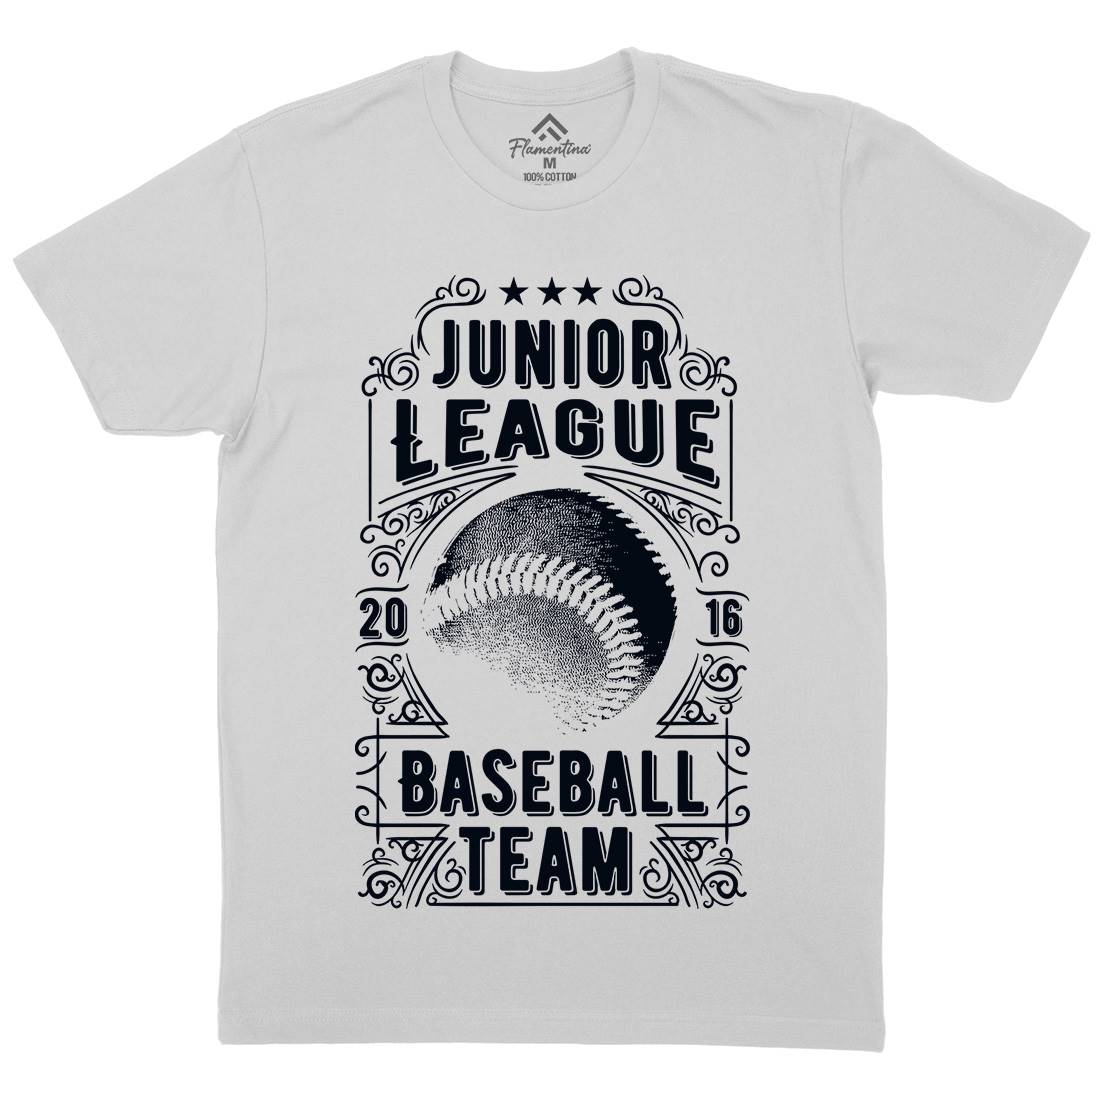 Baseball Team Mens Crew Neck T-Shirt Sport C907